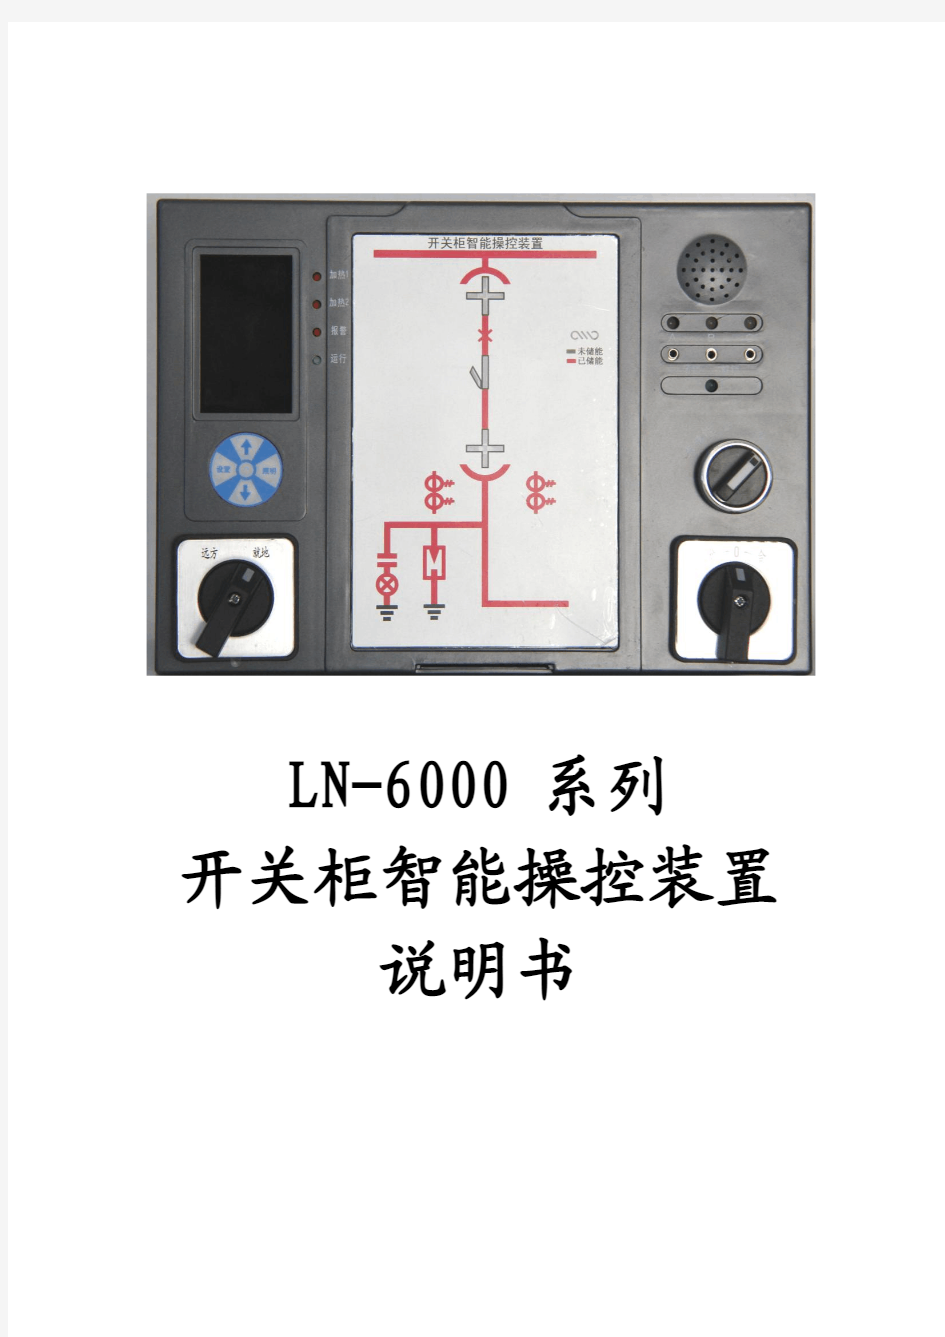 LN-6000系列开关柜智能操控装置说明书